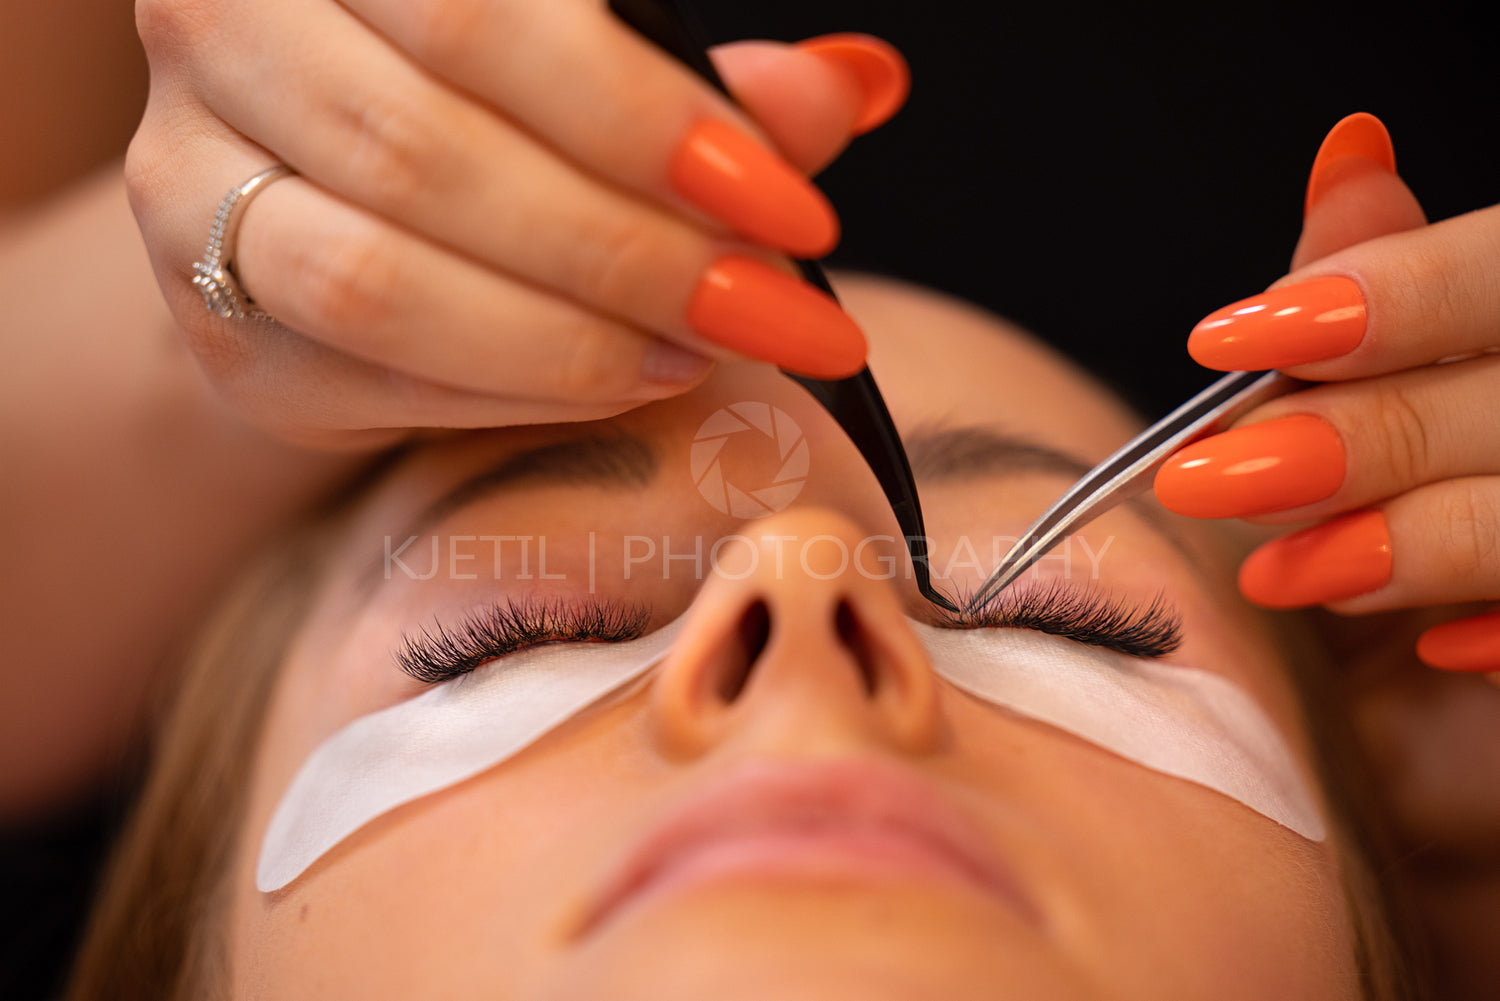 Hands Of Beauty Specialist Using Tweezers On Female Client